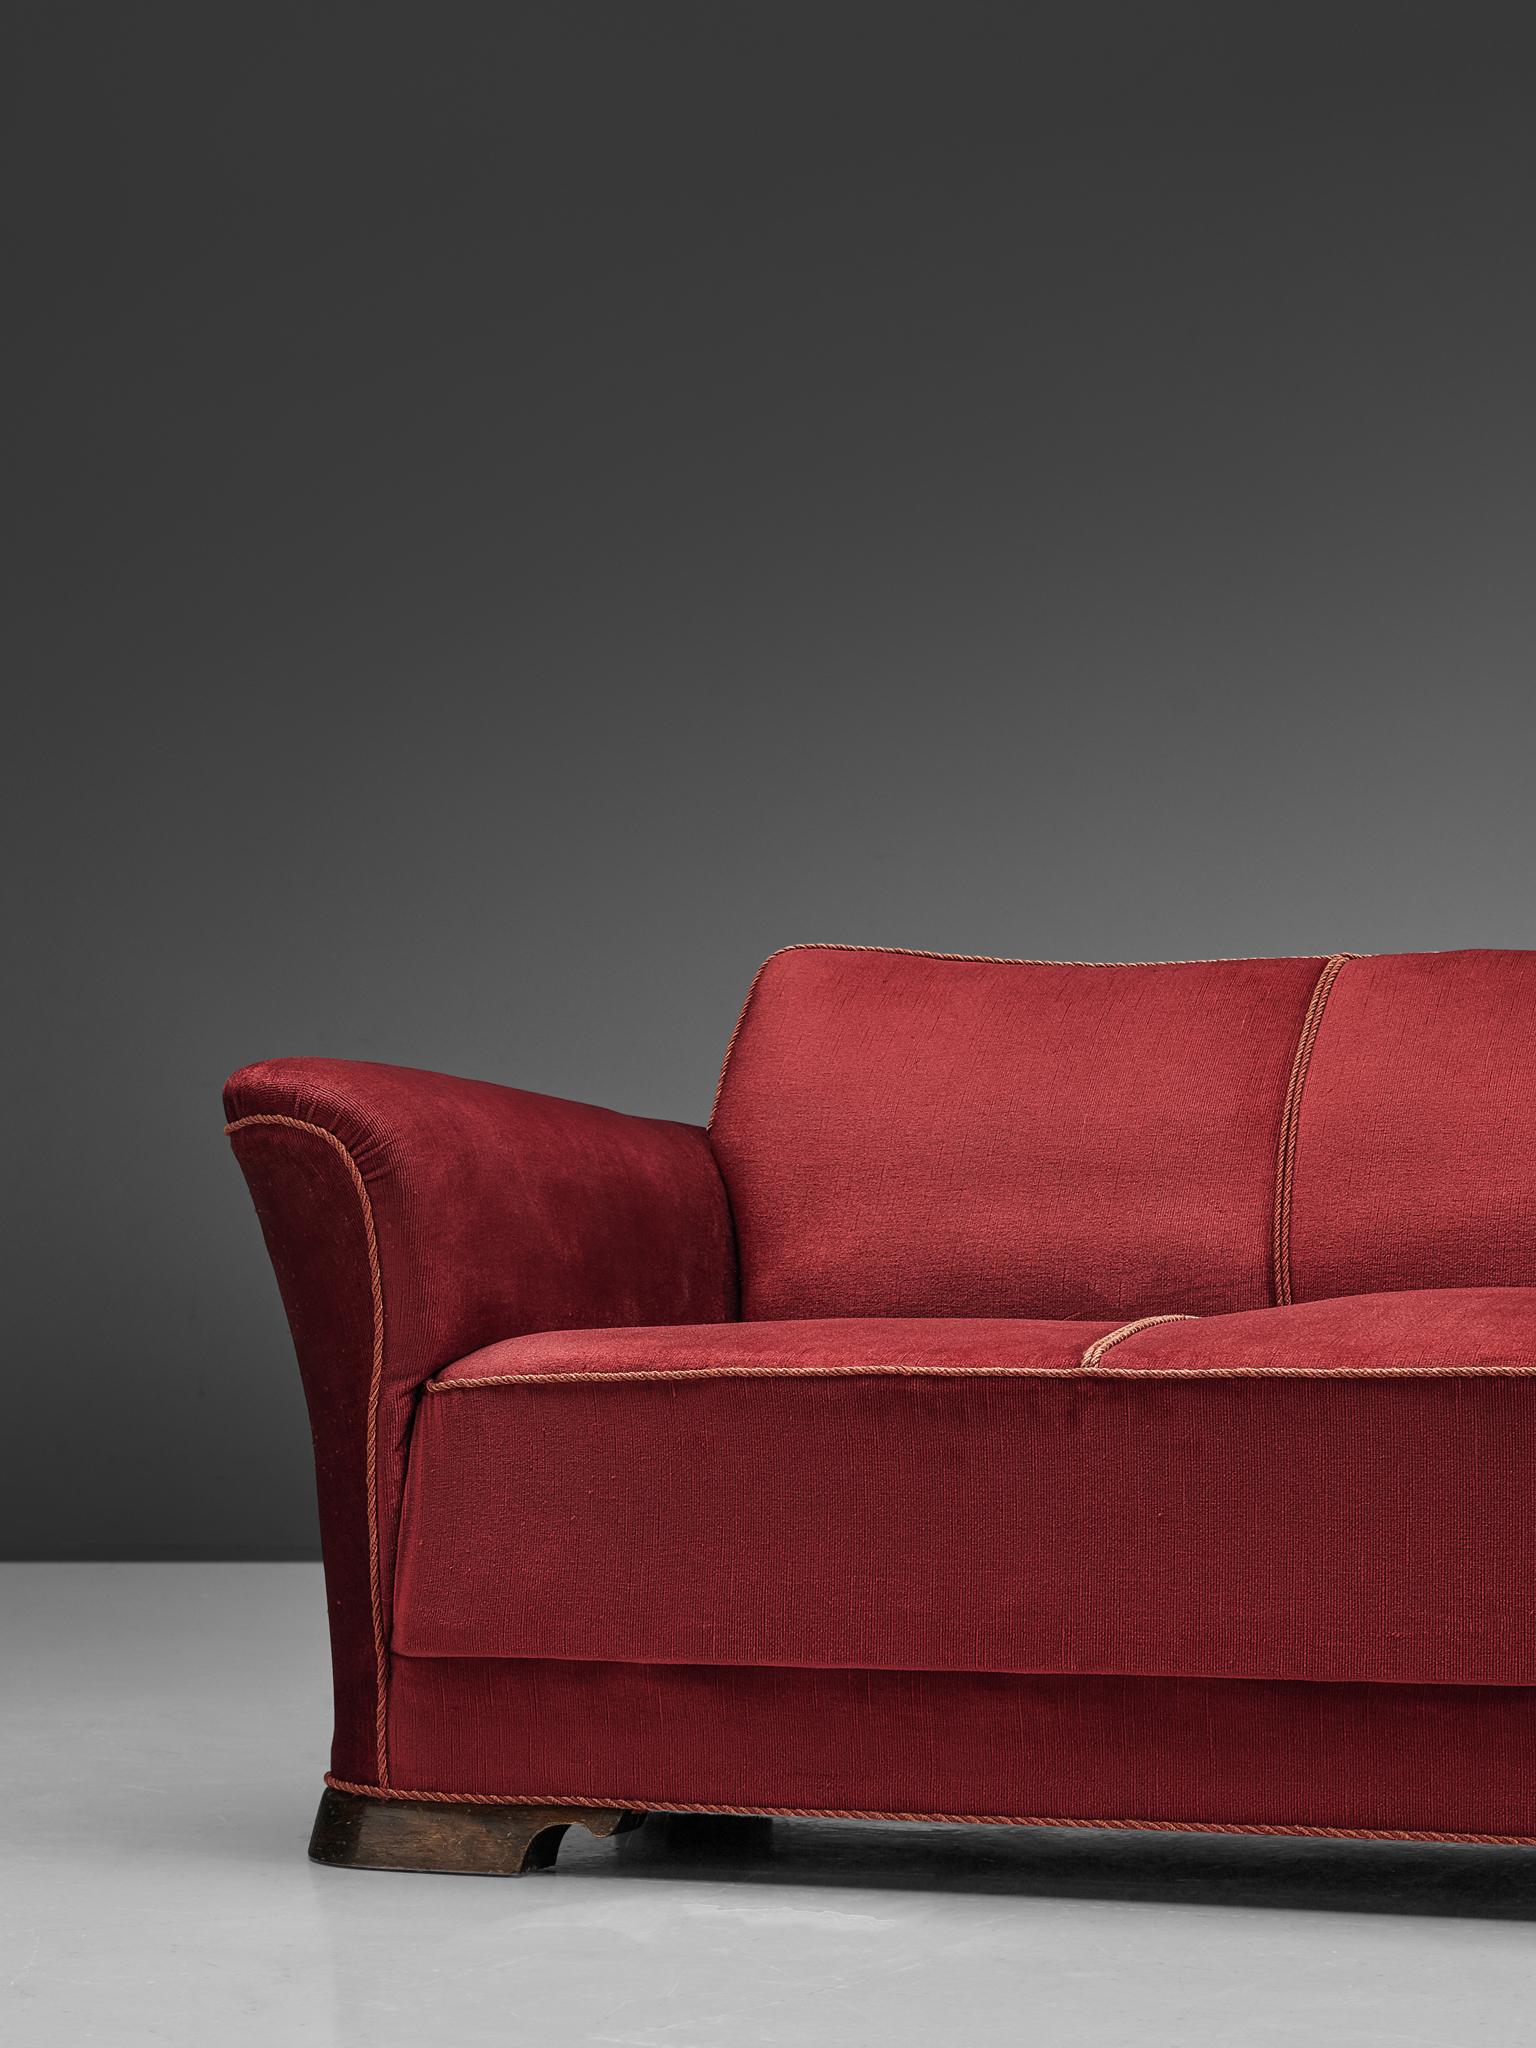 Velvet Danish Three-Seat Sofa in Red Velours, 1940s